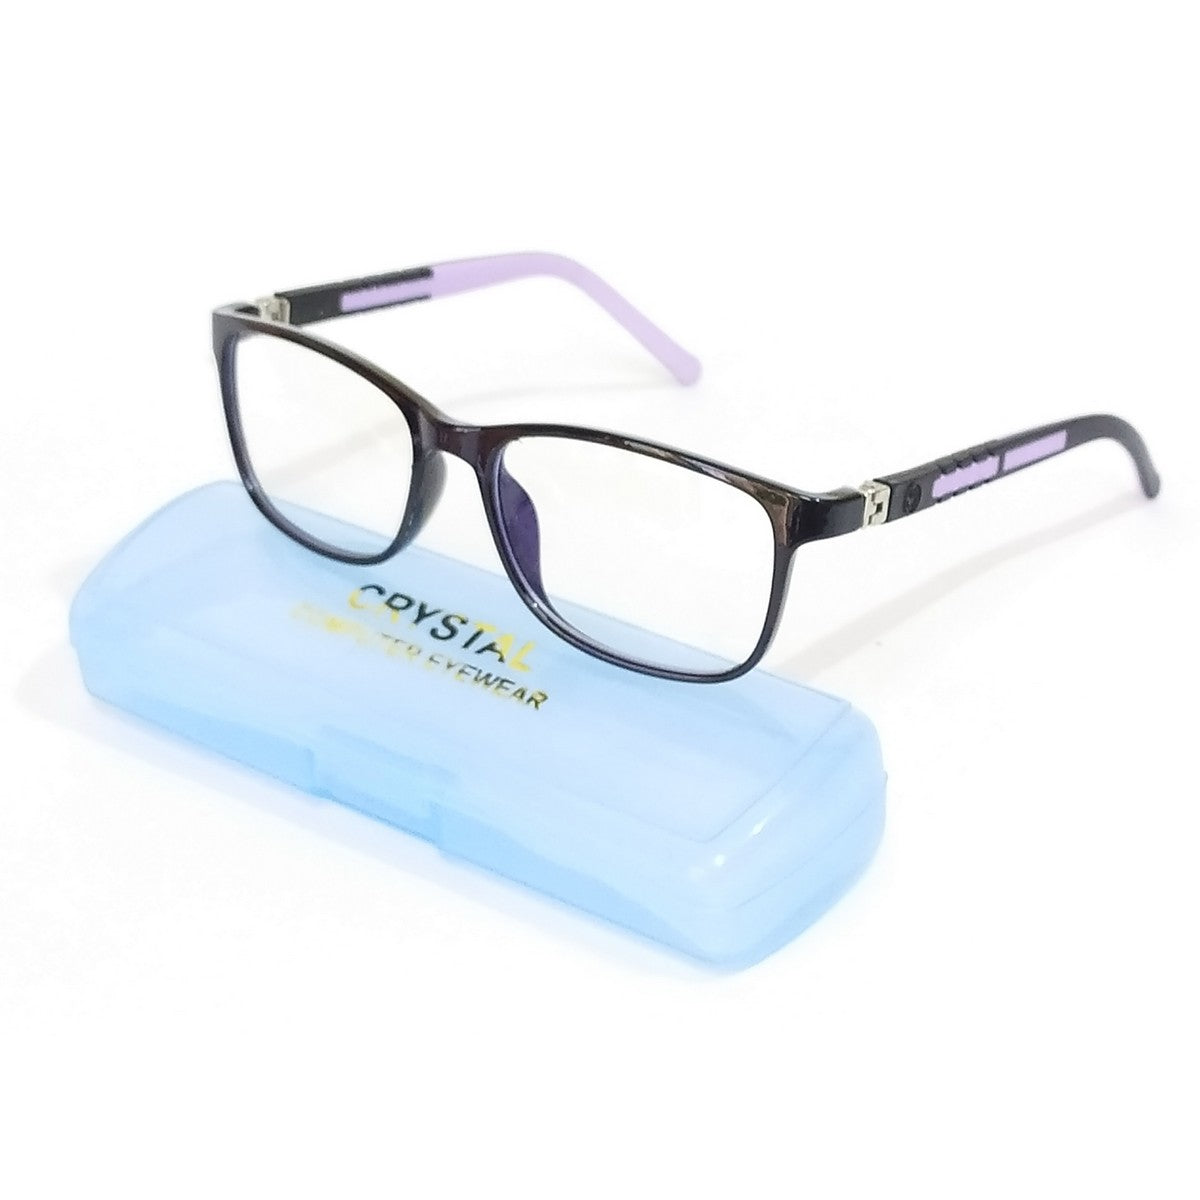 Unique Black & Purple Square Kids Blue Light Blocking Glasses - Ideal for Children Aged 6-10